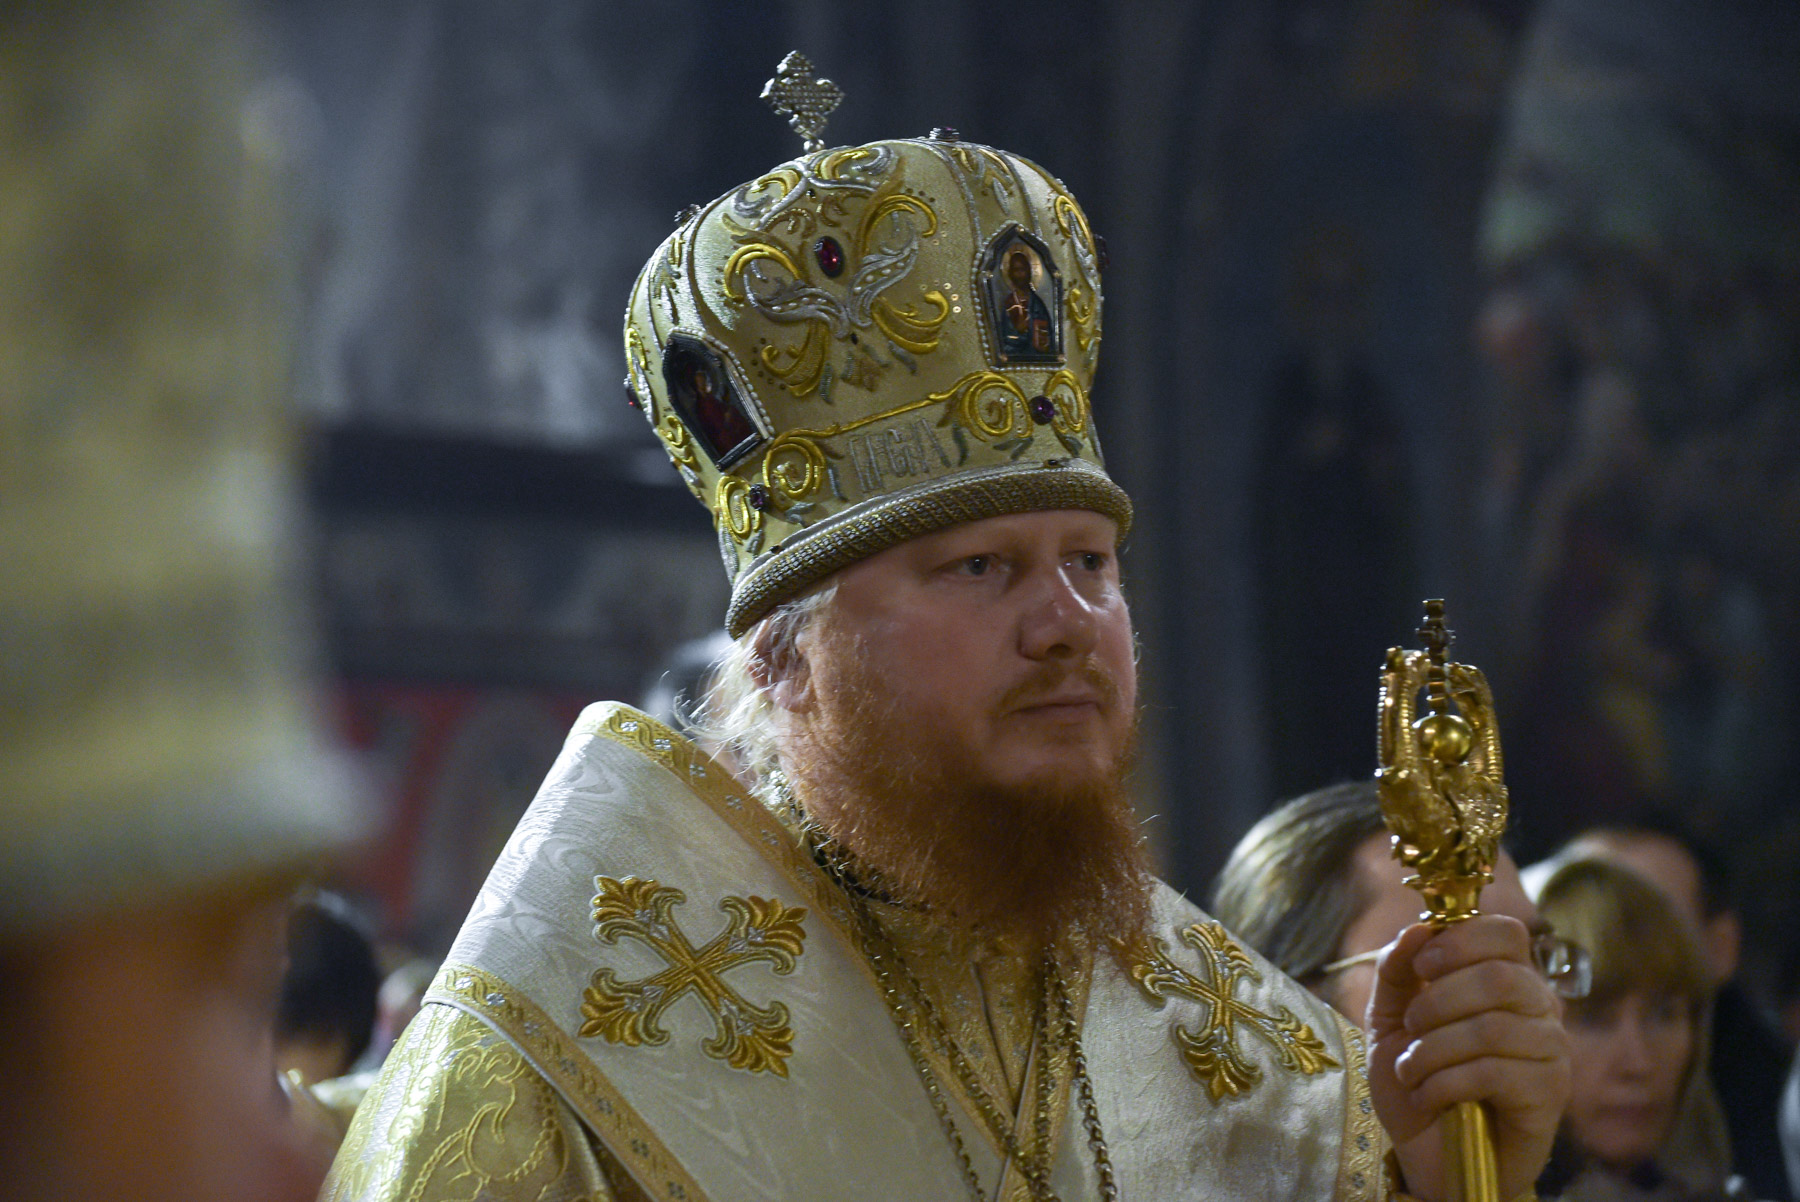 photos of orthodox christmas 0196